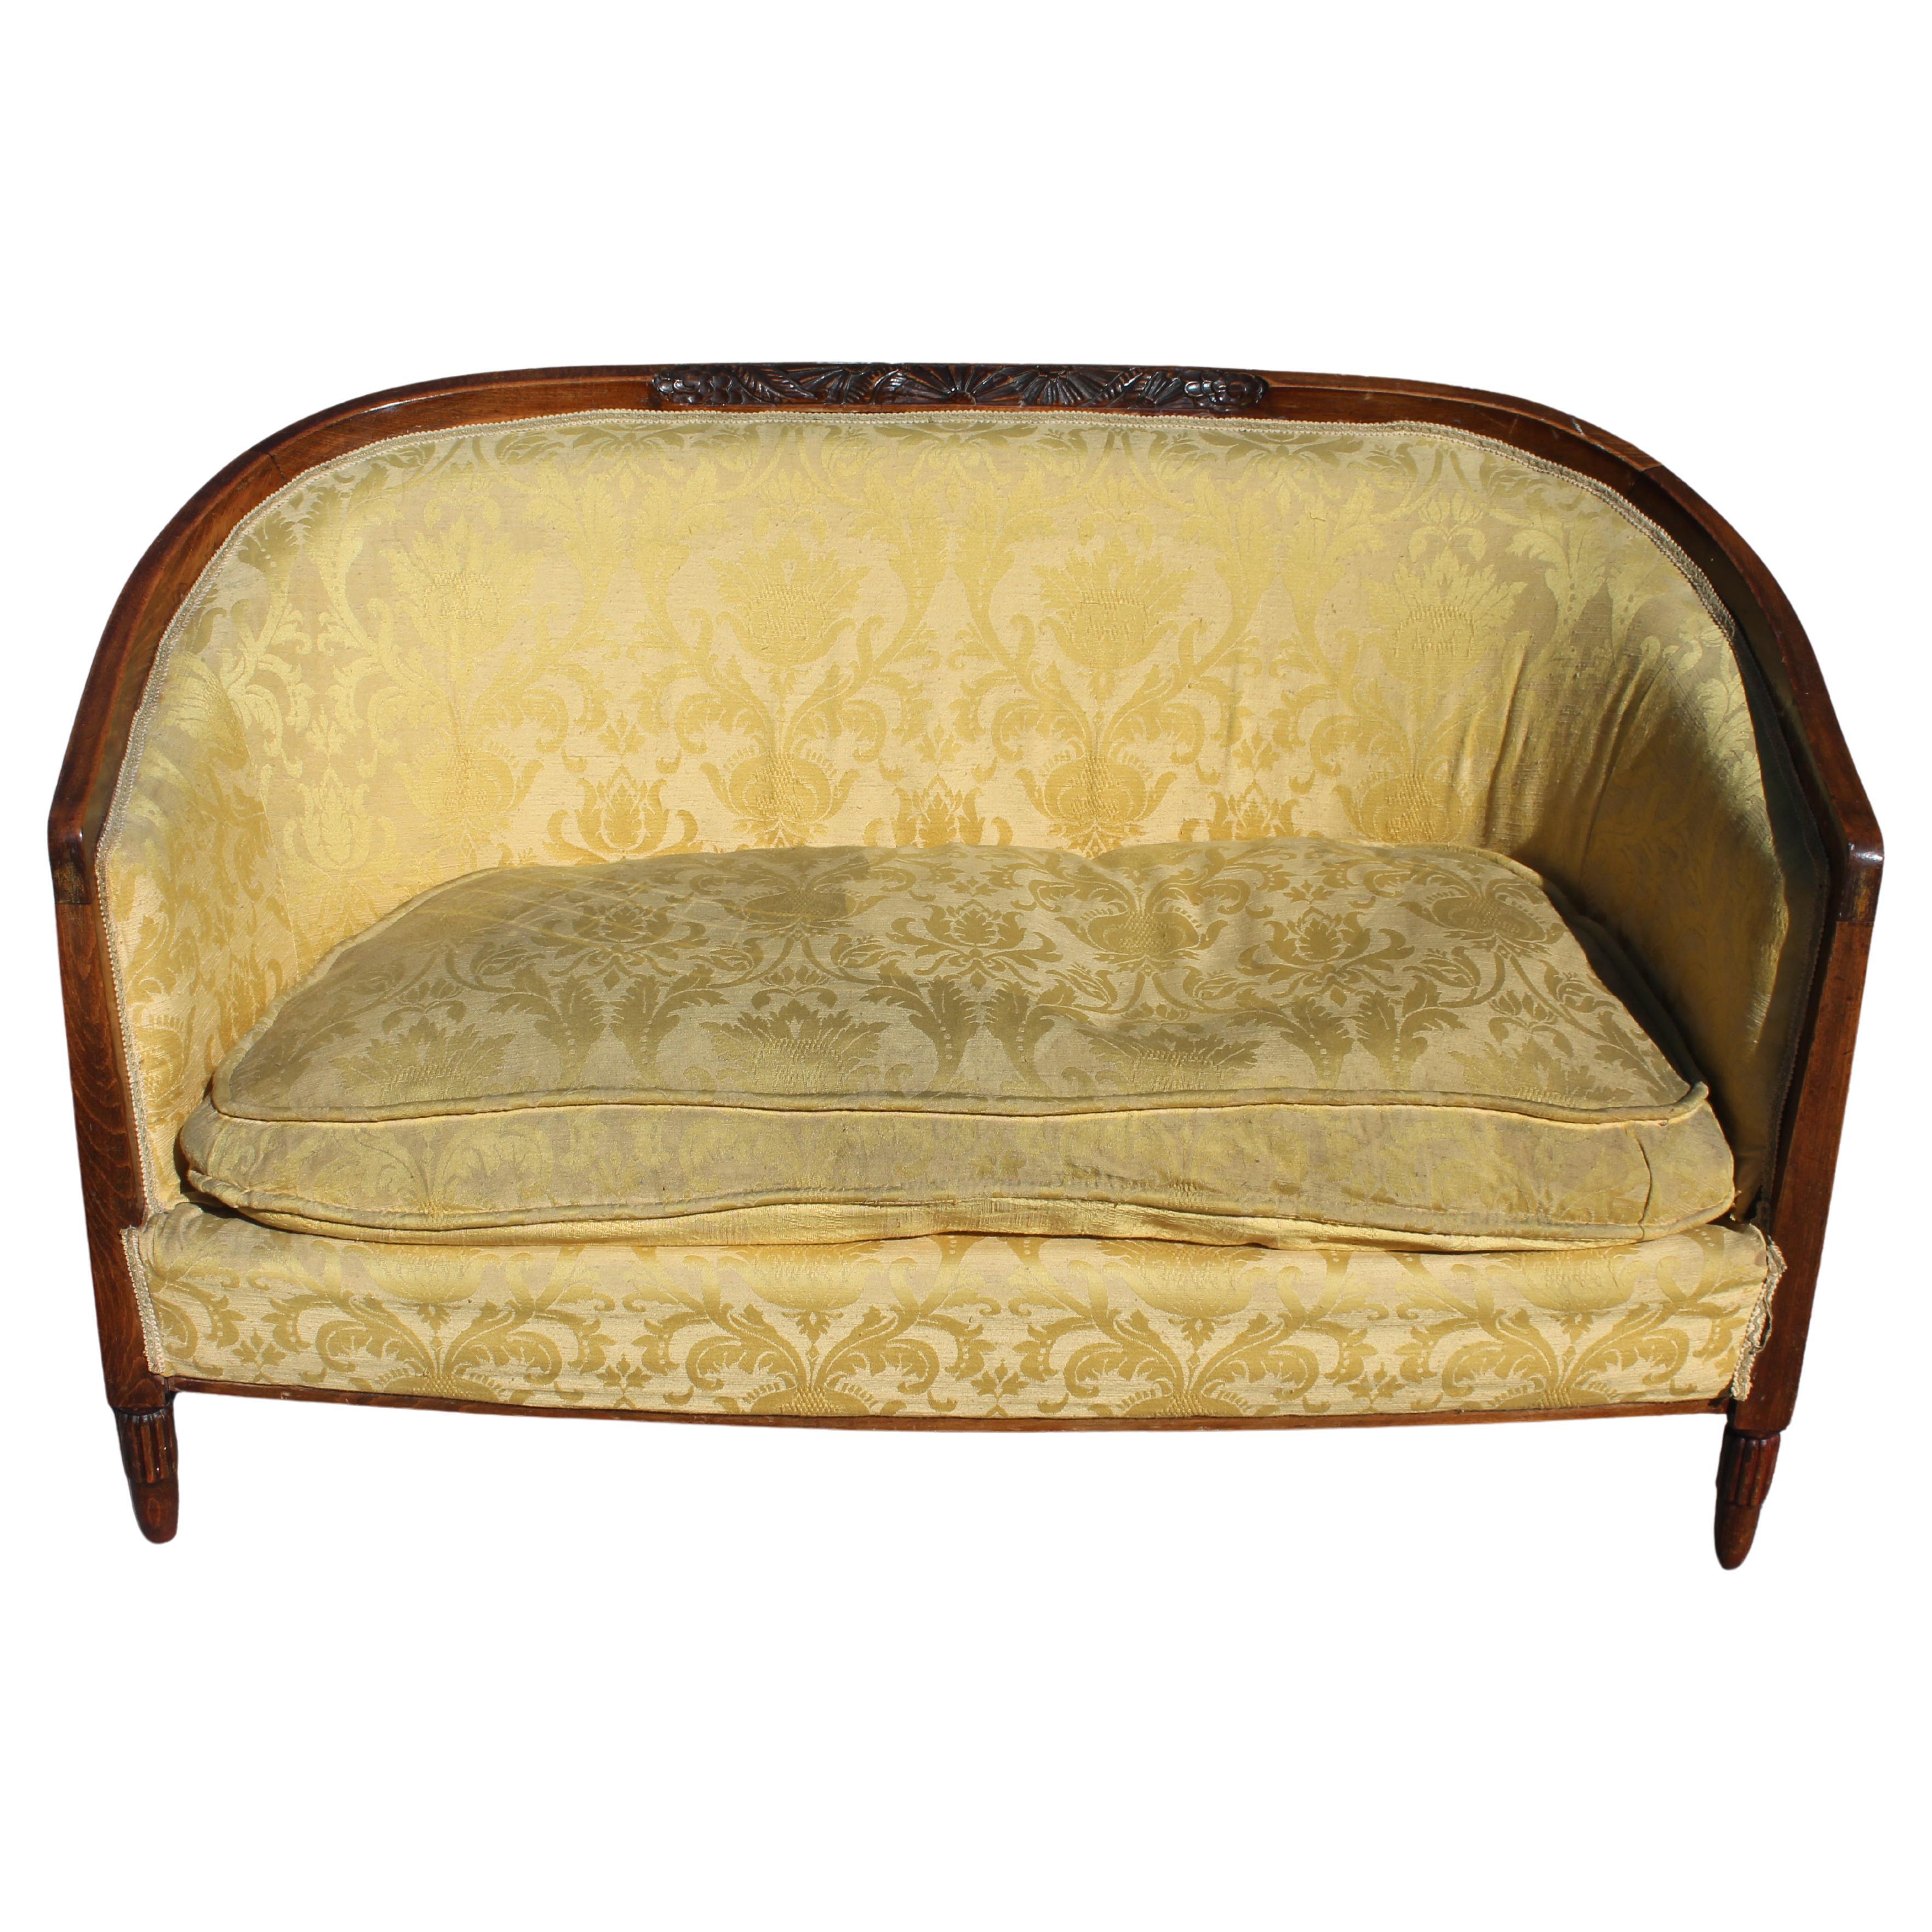 1930's Rare French Art Deco Carved Canape/ Sofa